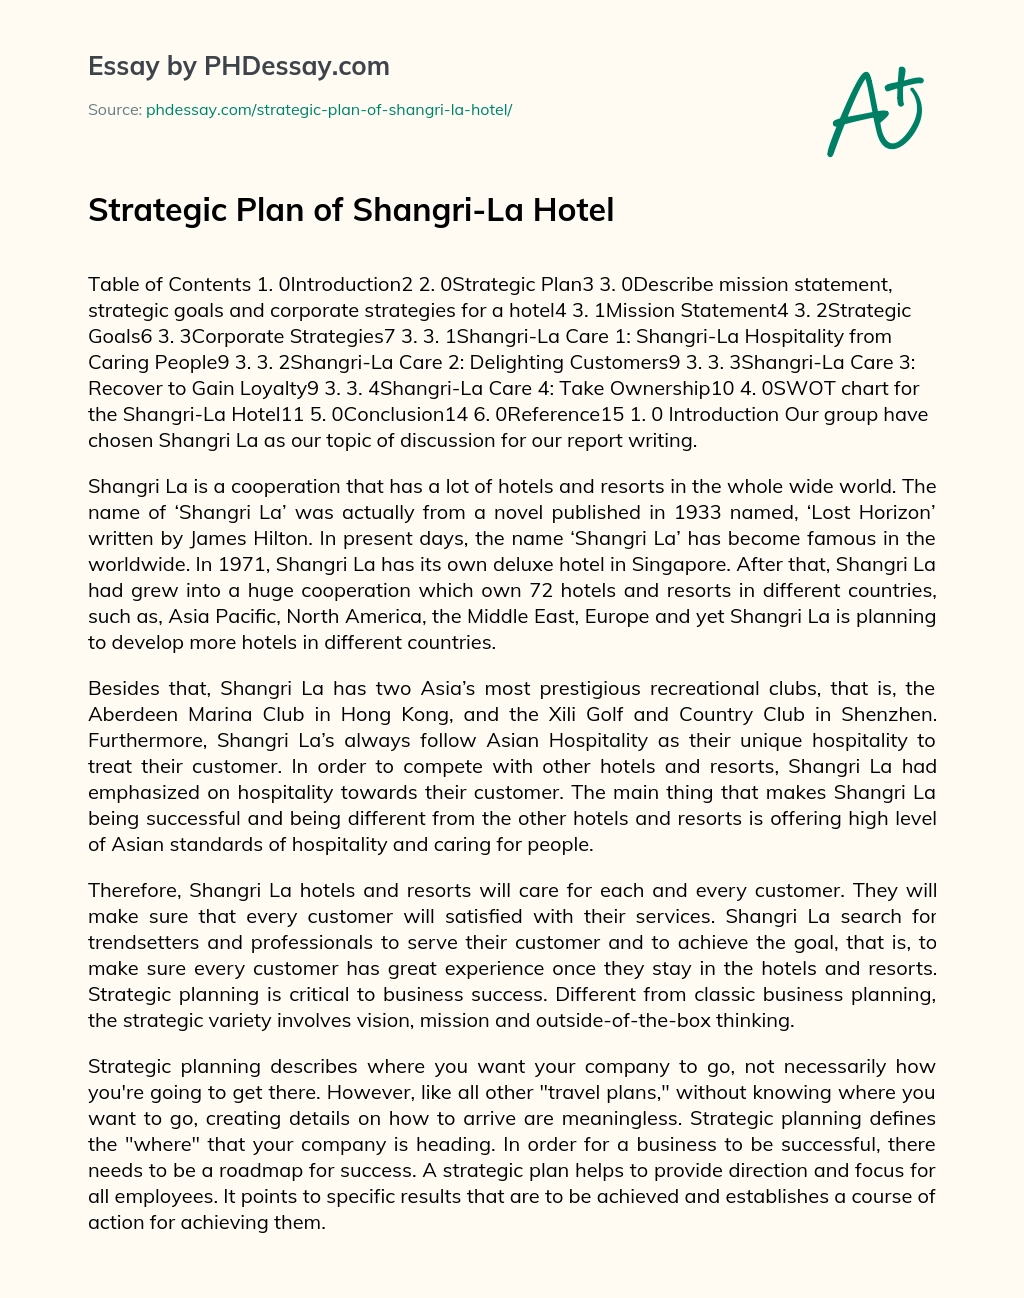 Strategic Plan of Shangri-La Hotel essay